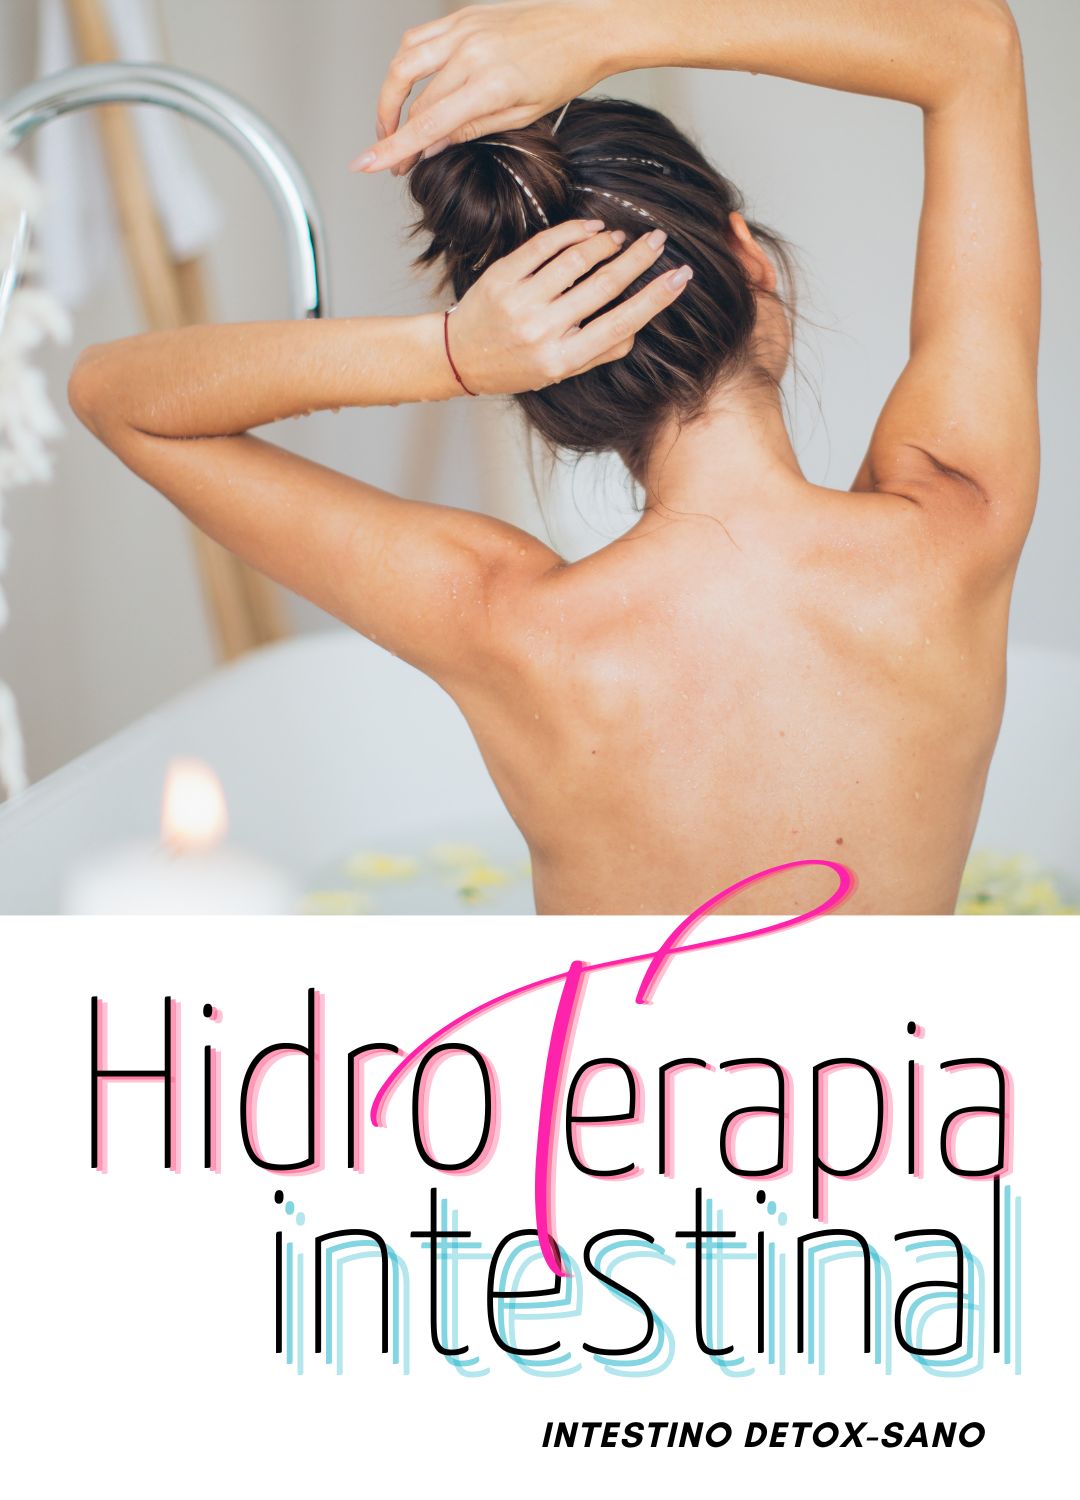 Hidoterapia intestinal